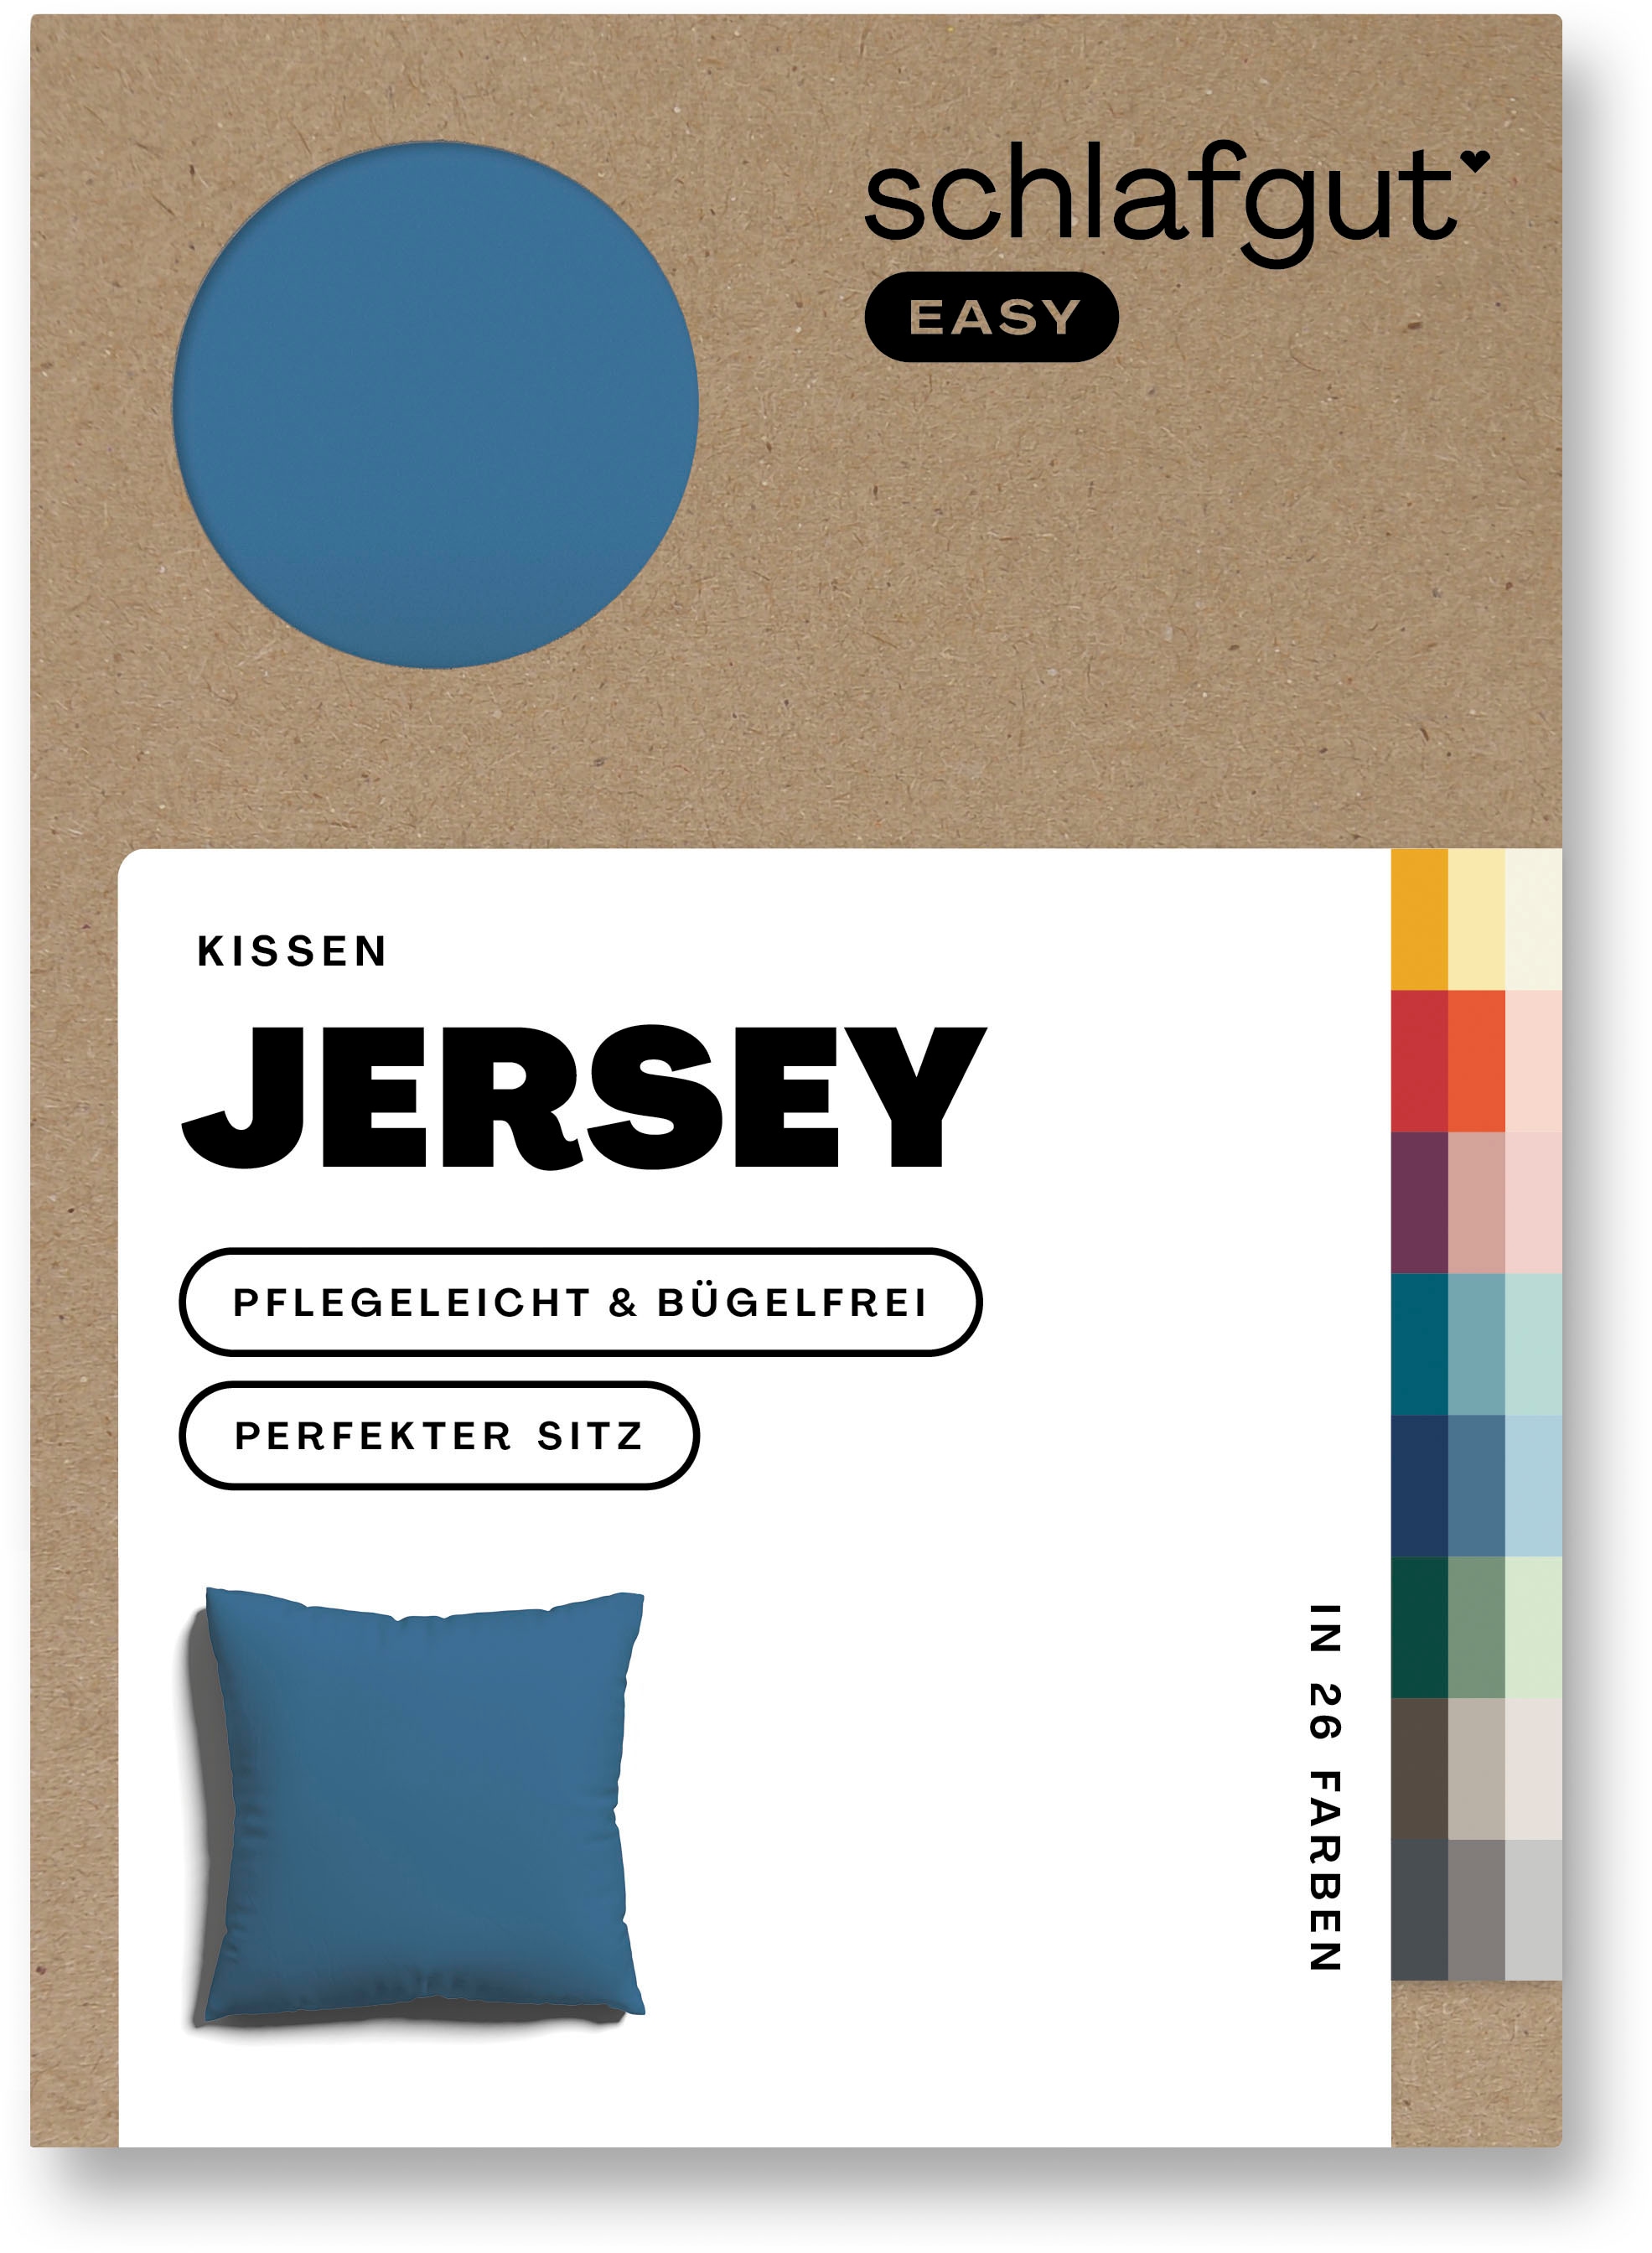 Schlafgut Kissenbezug "EASY Jersey", (1 St.), Kissenhülle mit Reißverschluss, weich und saugfähig, Kissenbezug